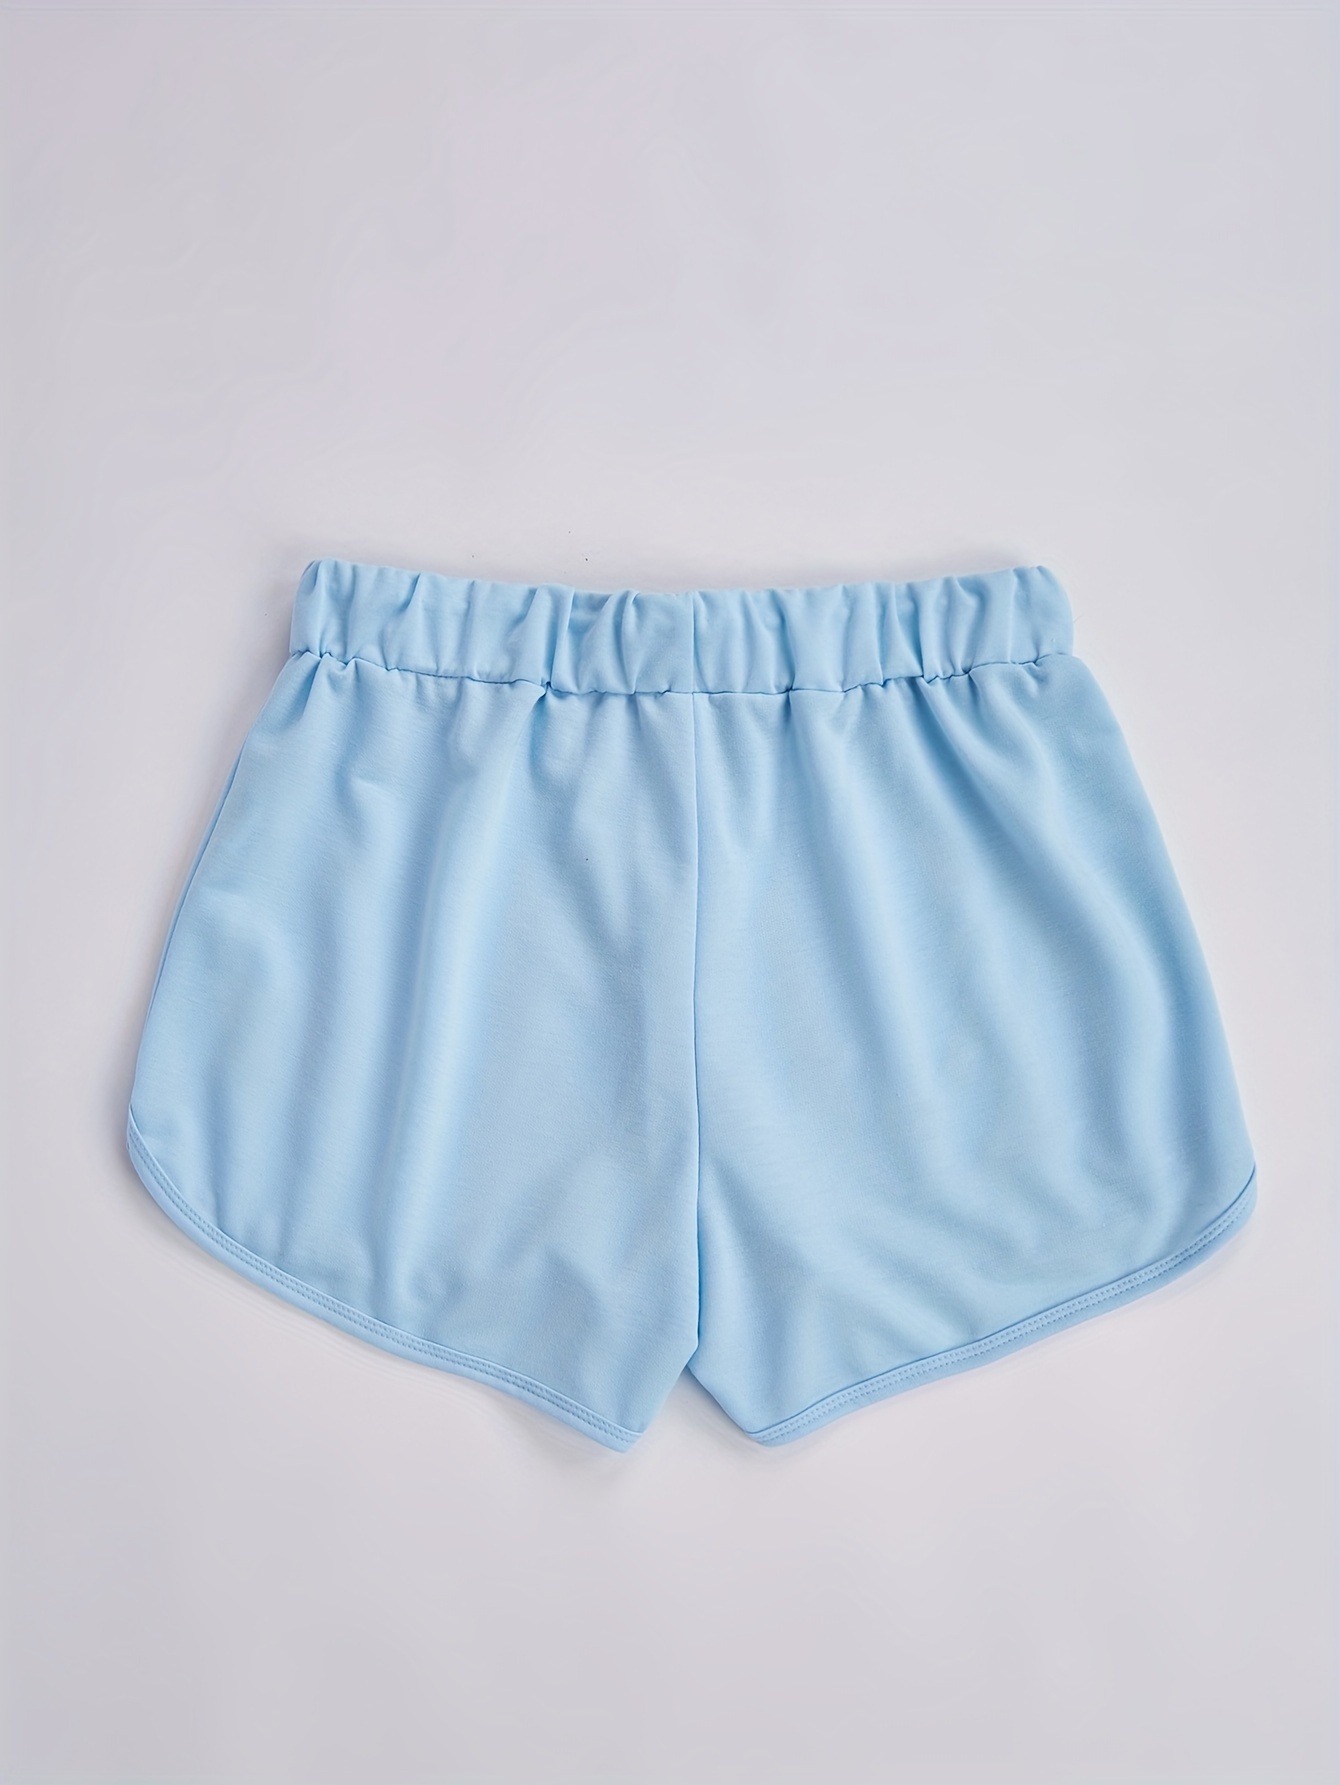 Light Blue Women Shorts, Cotton Summer Shorts, Sky Blue Ladies Shorts 